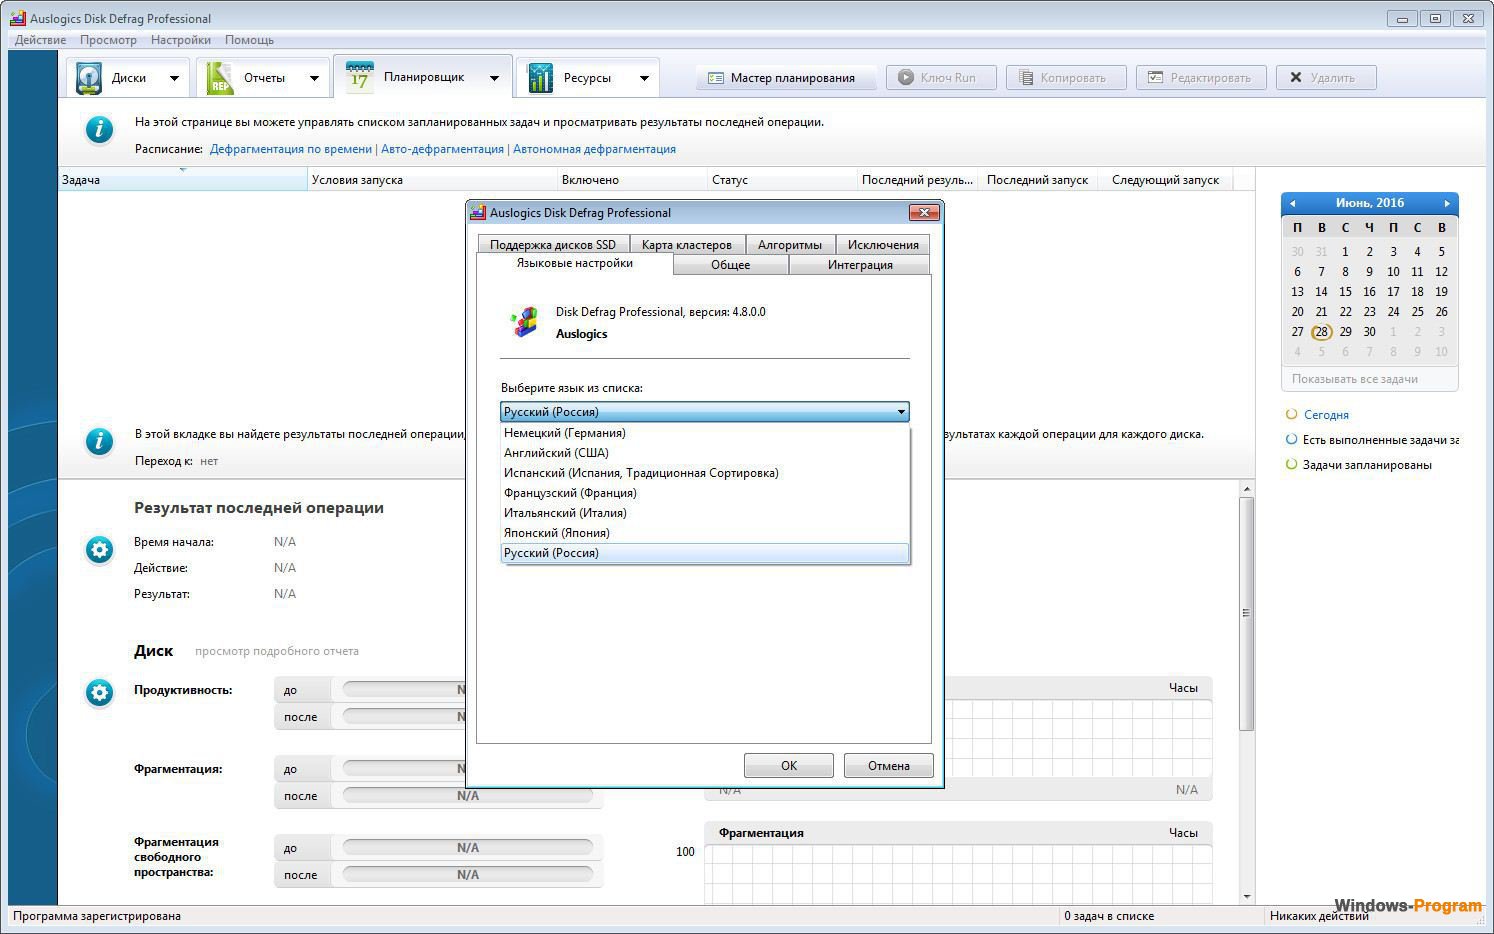 Auslogics Disk Defrag Pro 11.0.0.3 / Ultimate 4.13.0.0 instal the new version for ipod